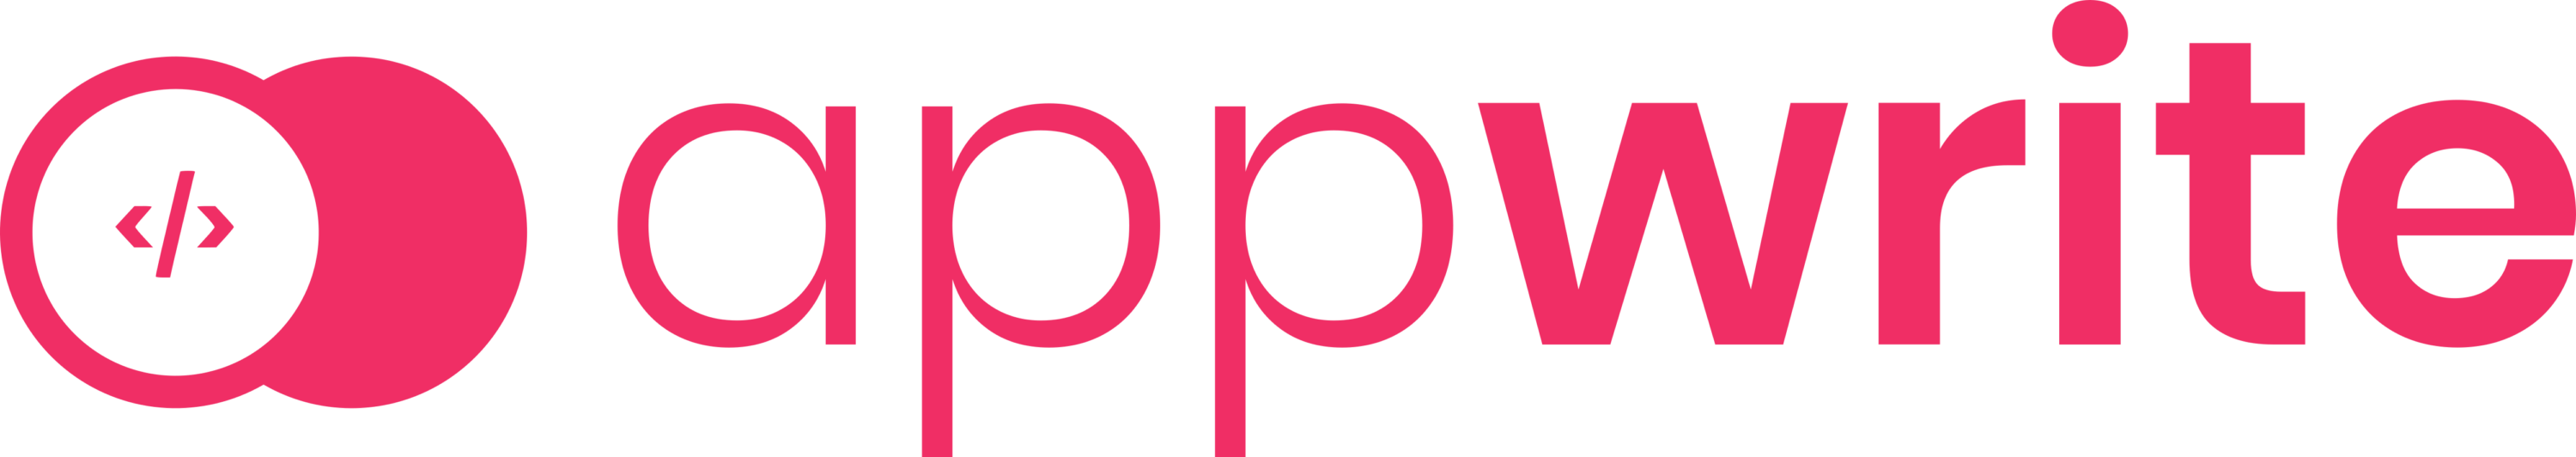 Appwrite Logo